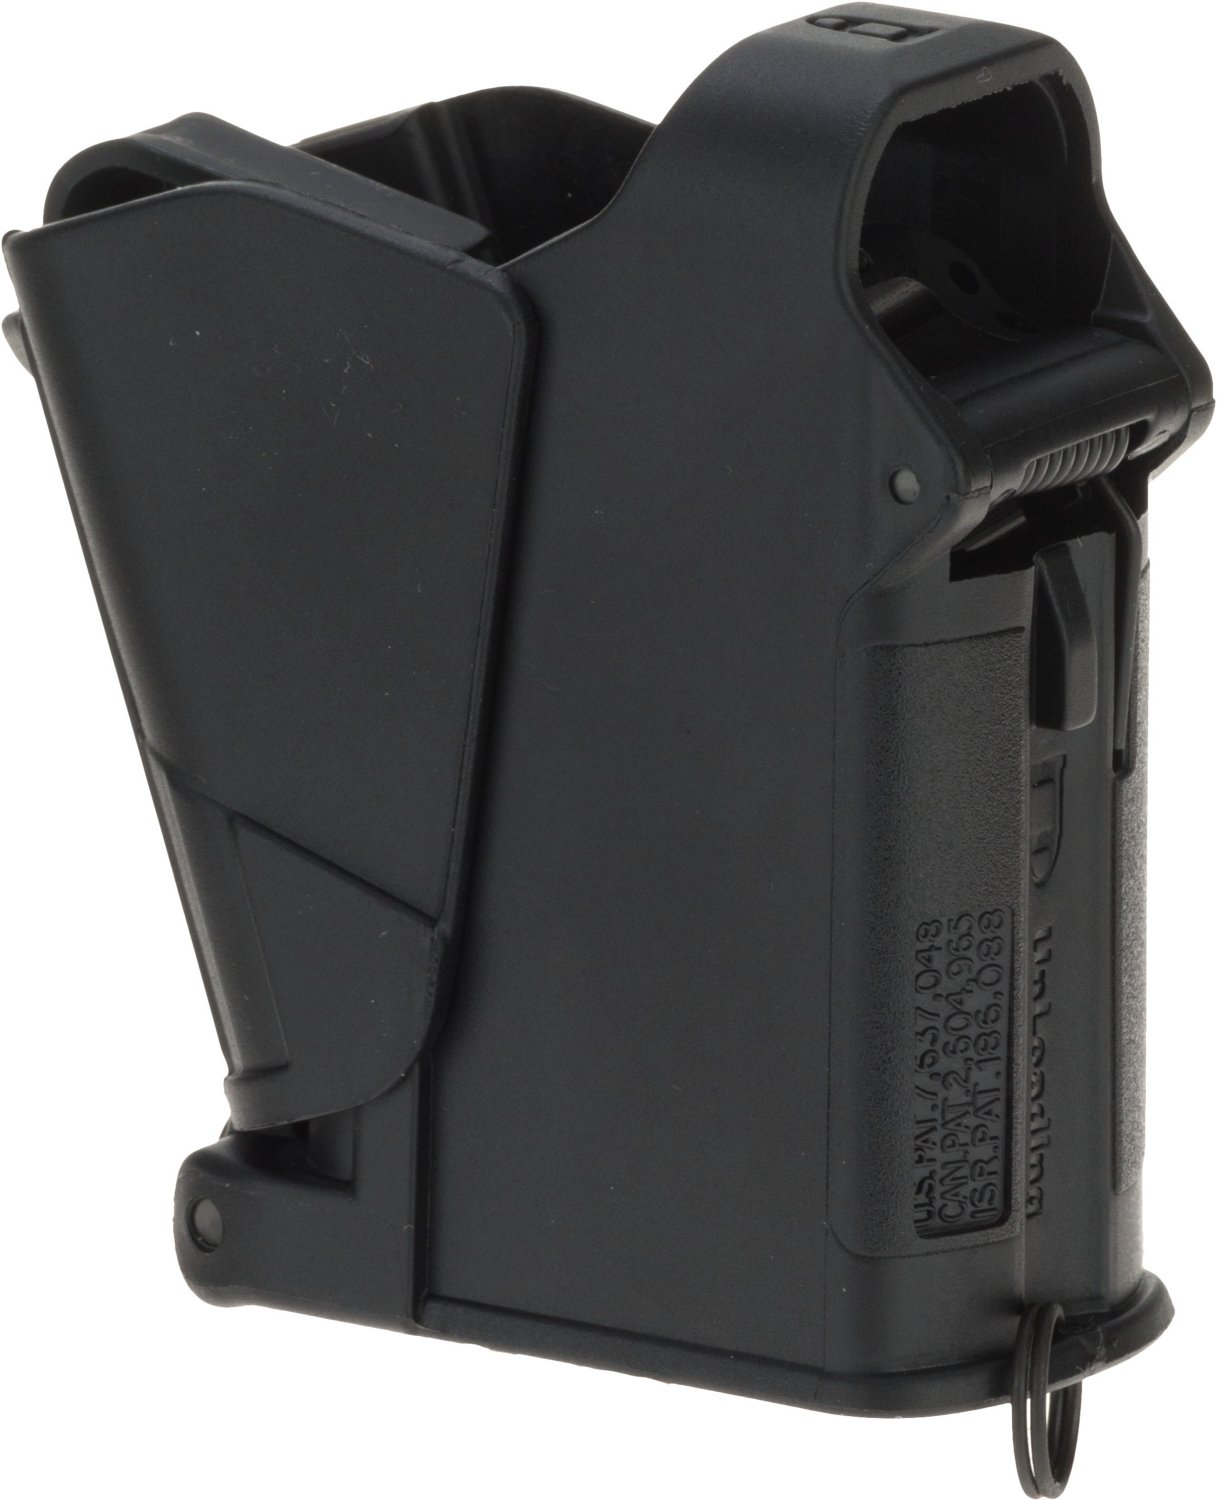 Uplula 9mm magazine loader, universal pistol magazine loader